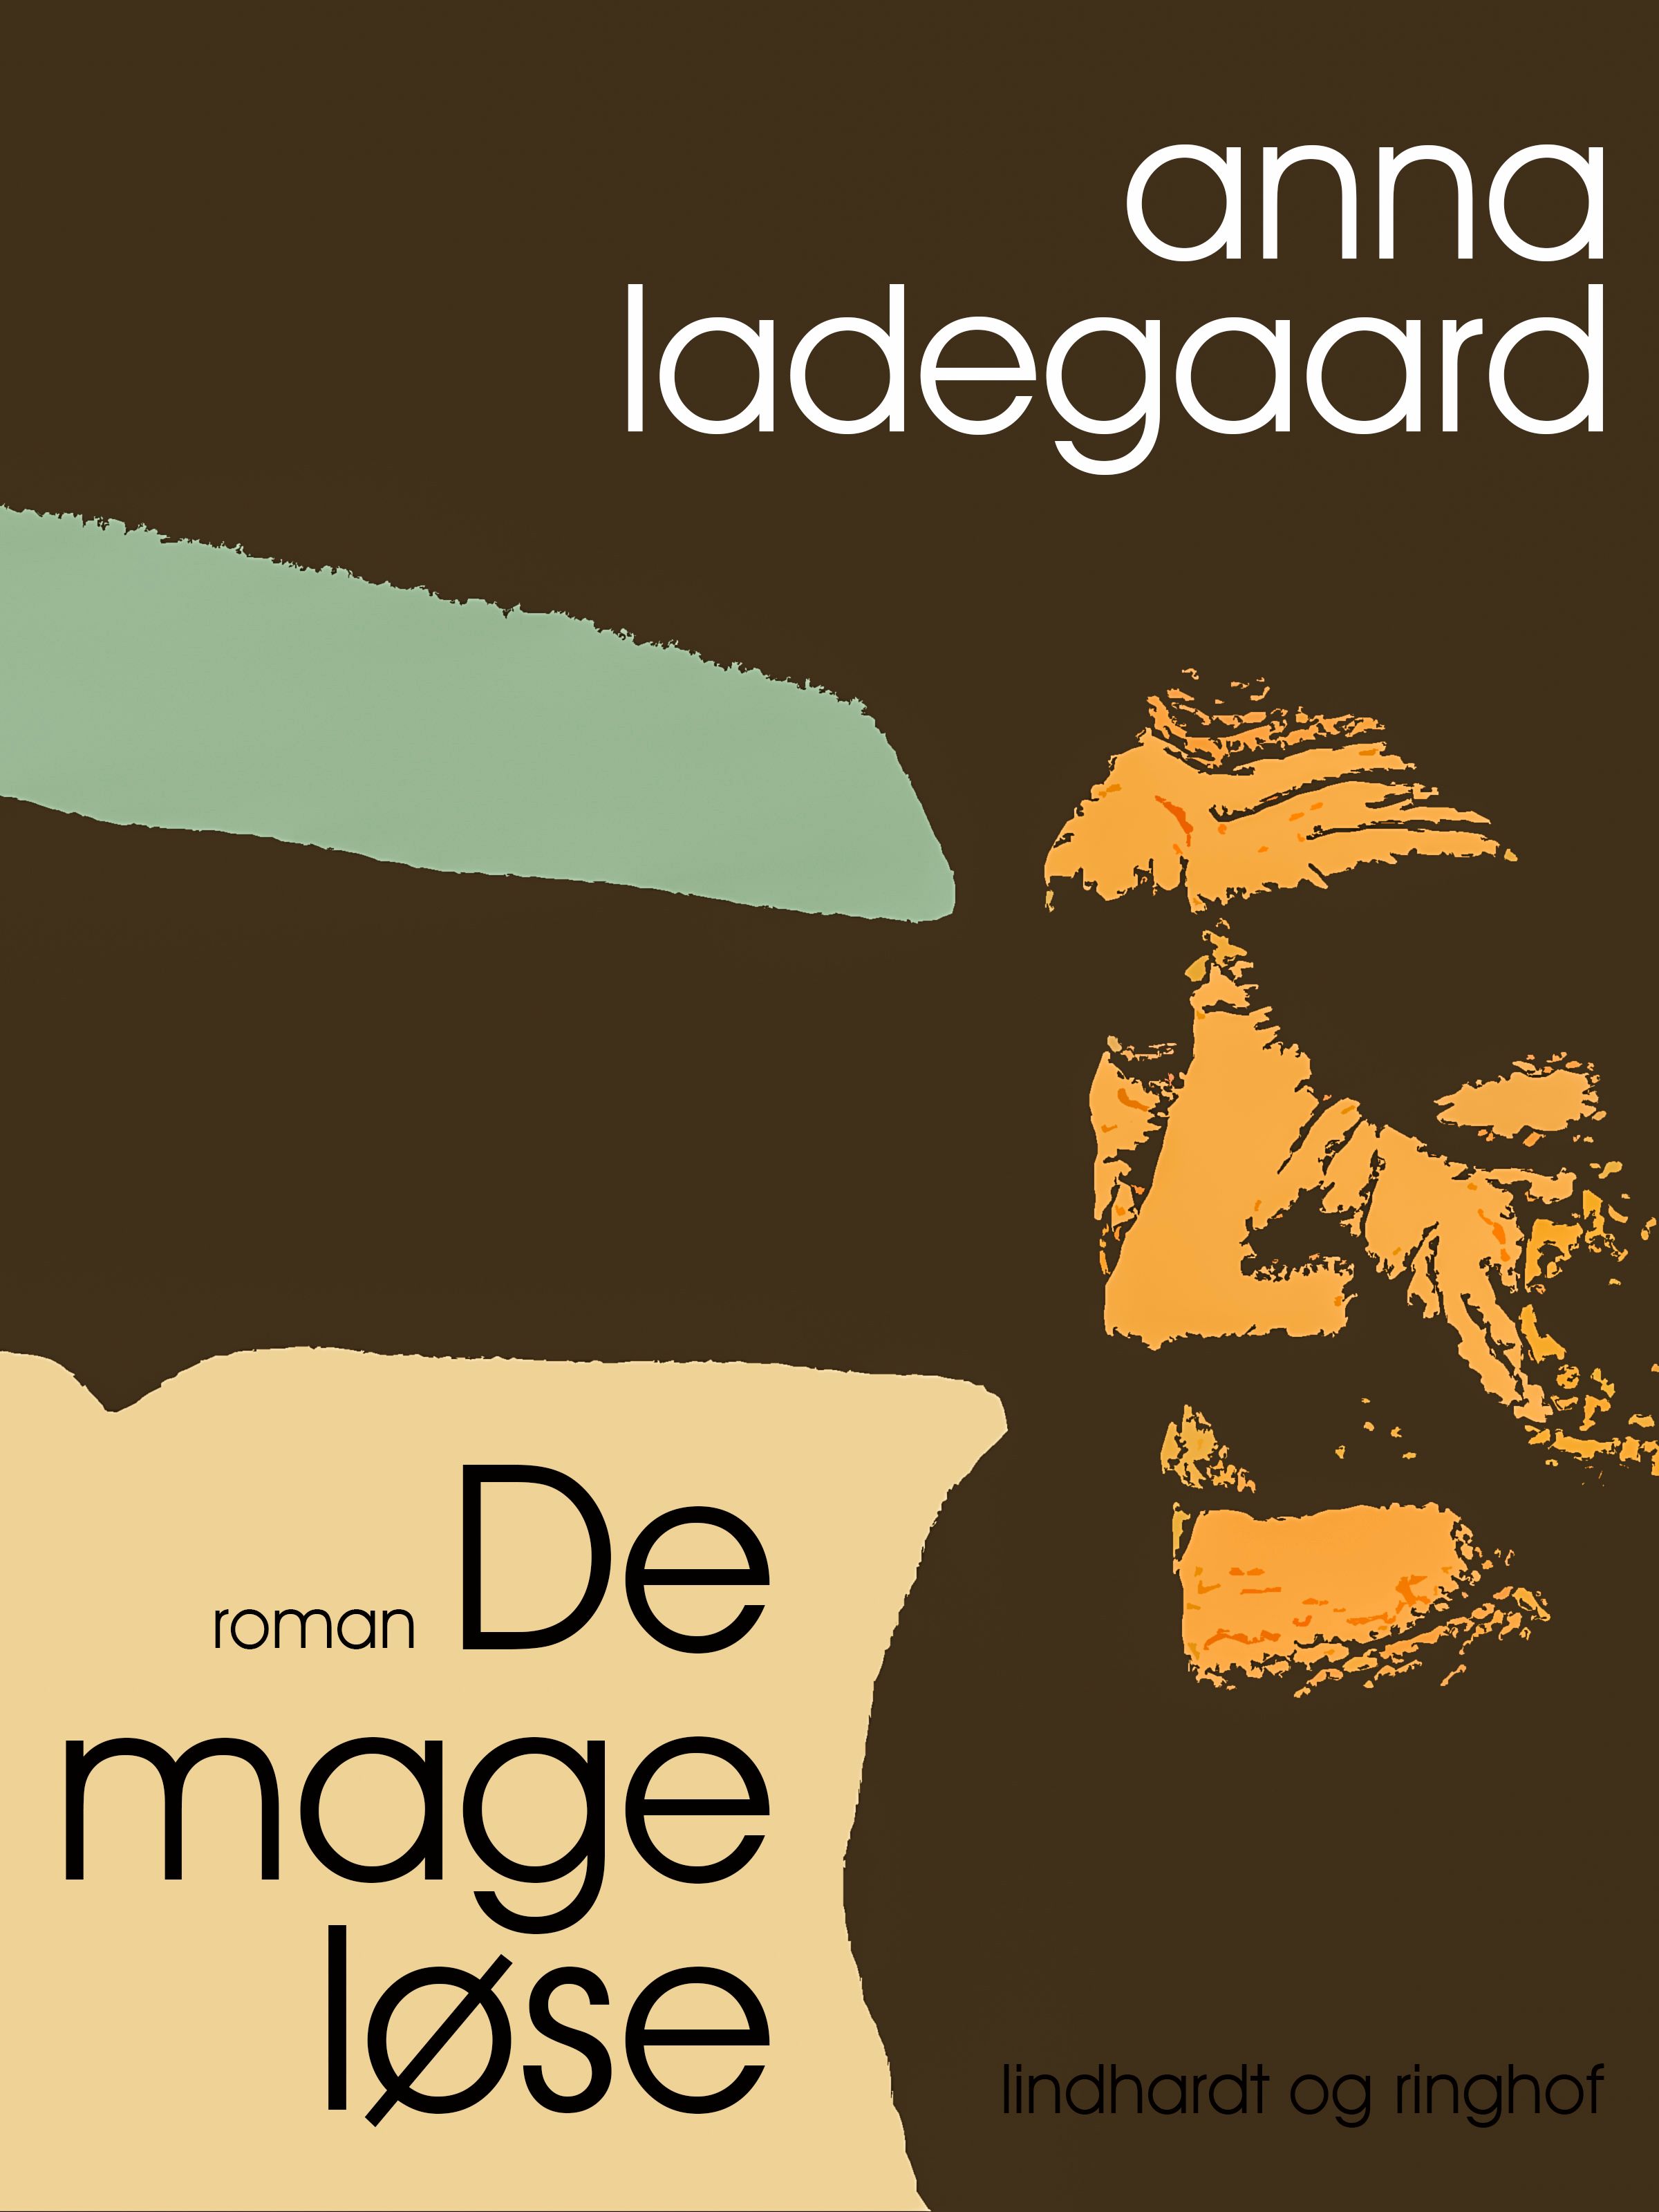 De mageløse, e-bok av Anna Ladegaard